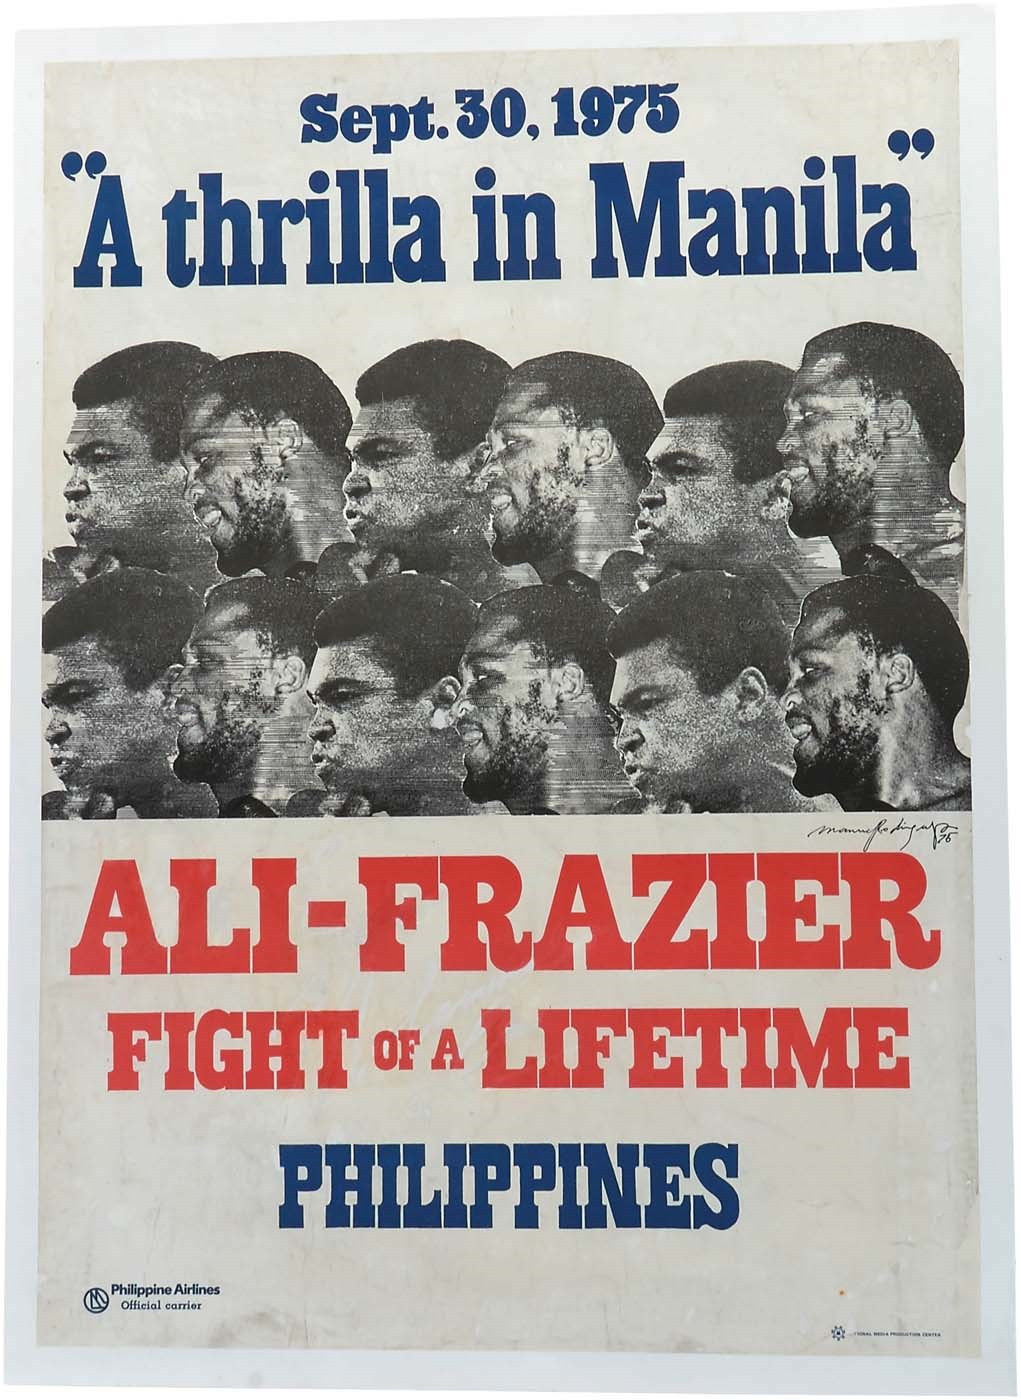 Muhammad Ali & Boxing - Ali v. Frazier III On Site Poster (Larger Version)